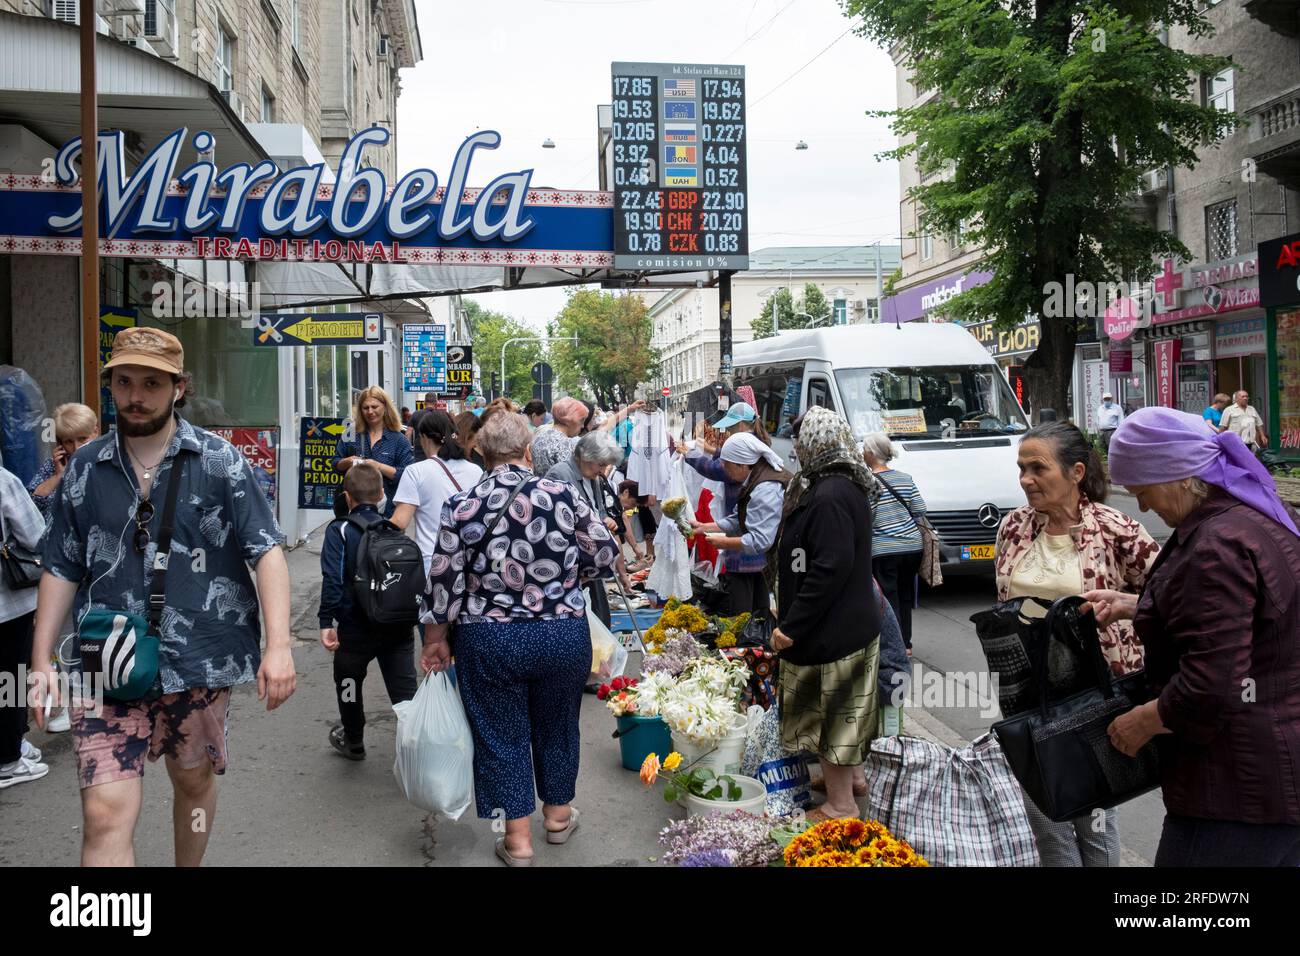 A street market in central Chișinău, Moldova Stock Photo